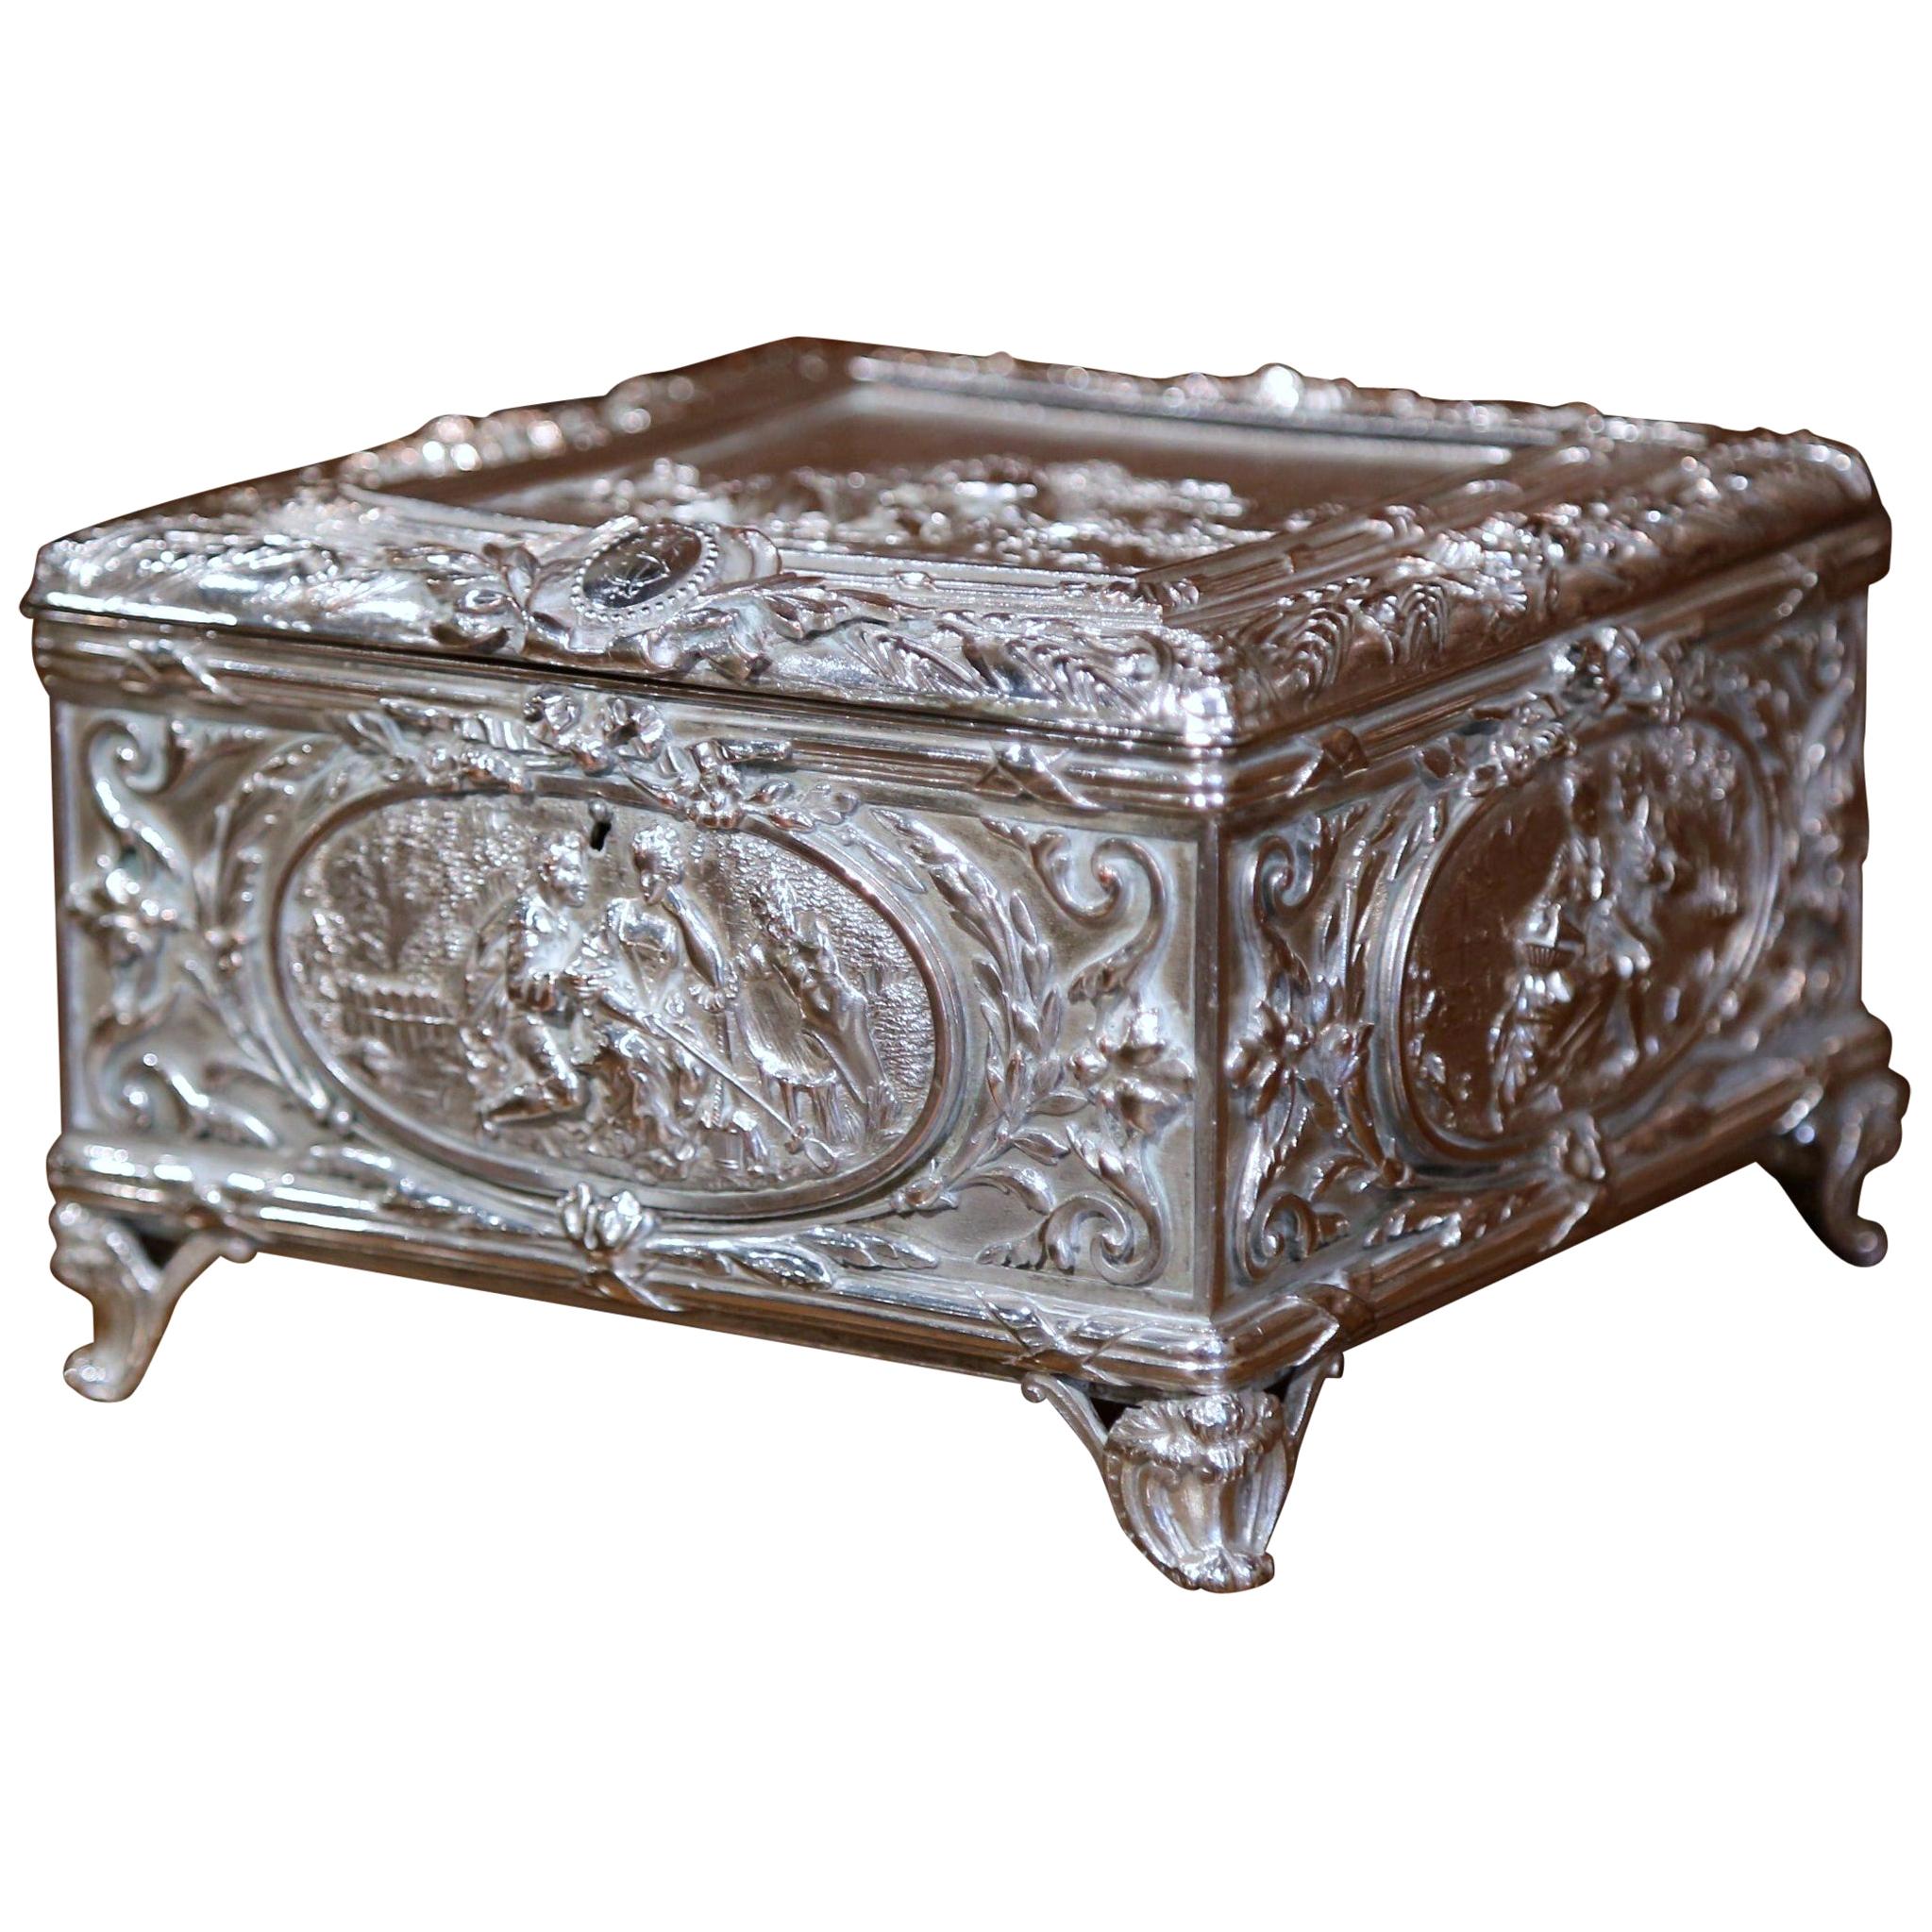 19th Century French Louis XVI Silver on Copper Repoussé Jewelry Casket Box